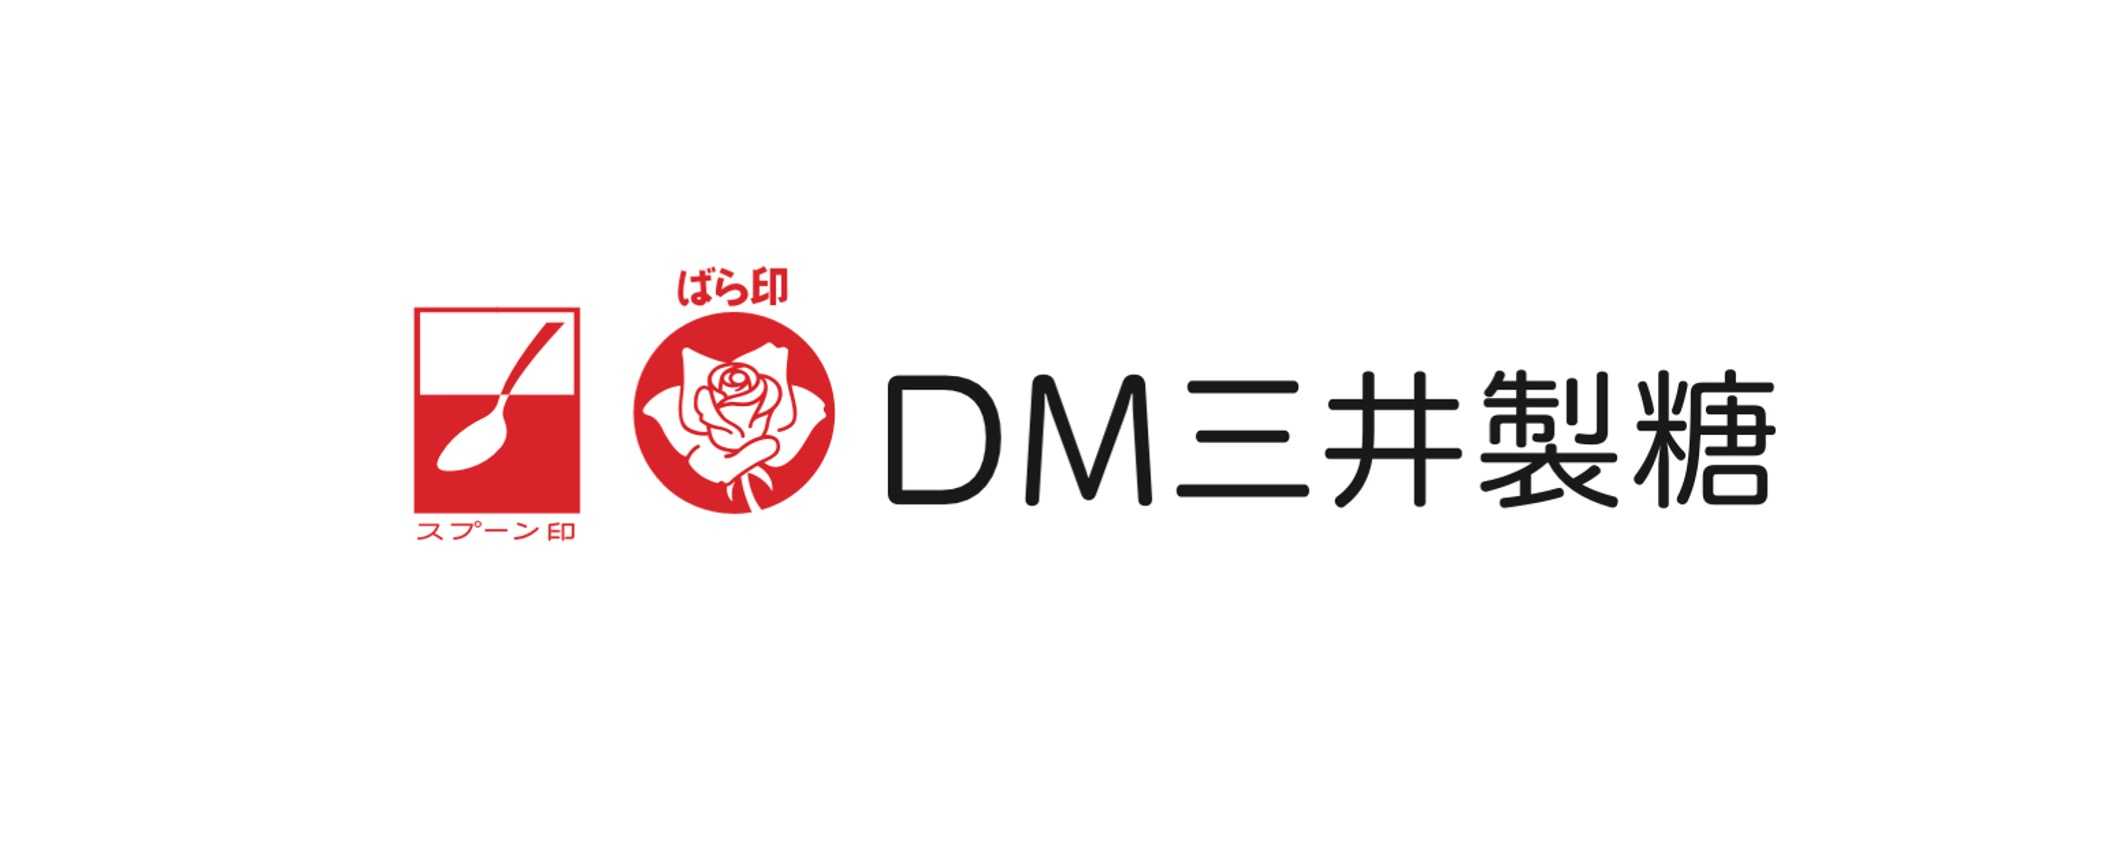 DM三井製糖株式会社